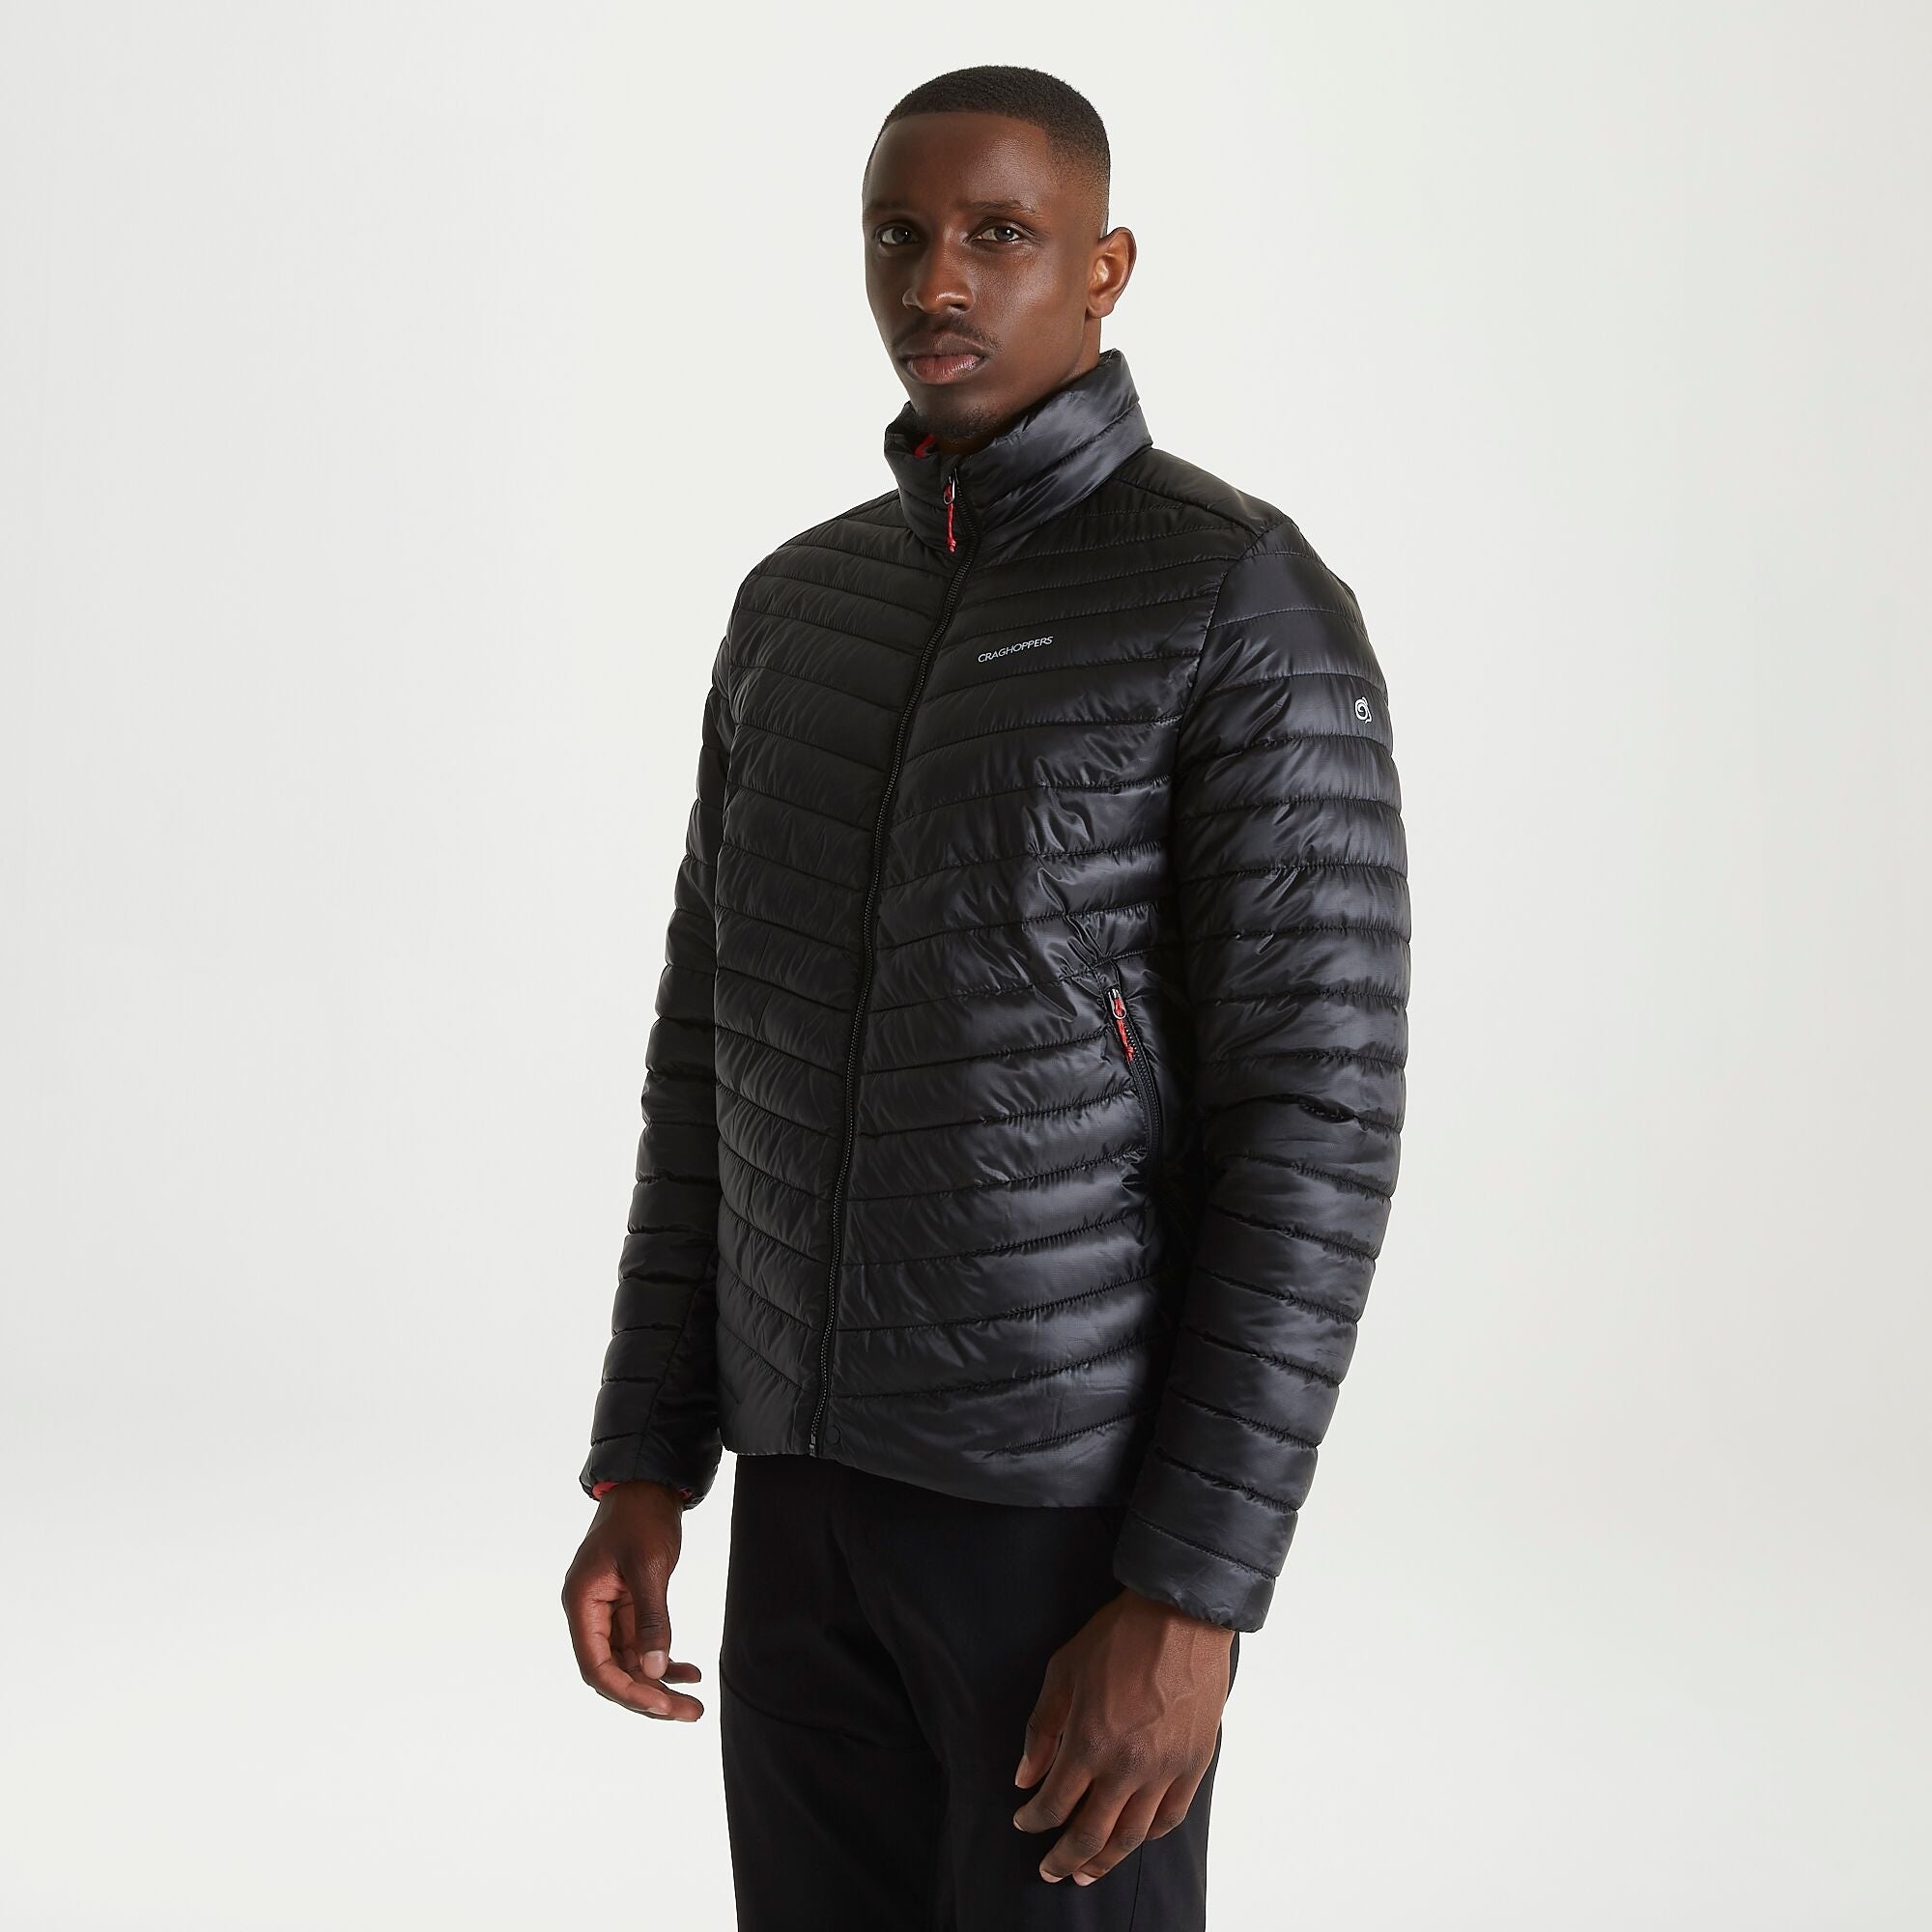 Men's ExpoLite Jacket | Black